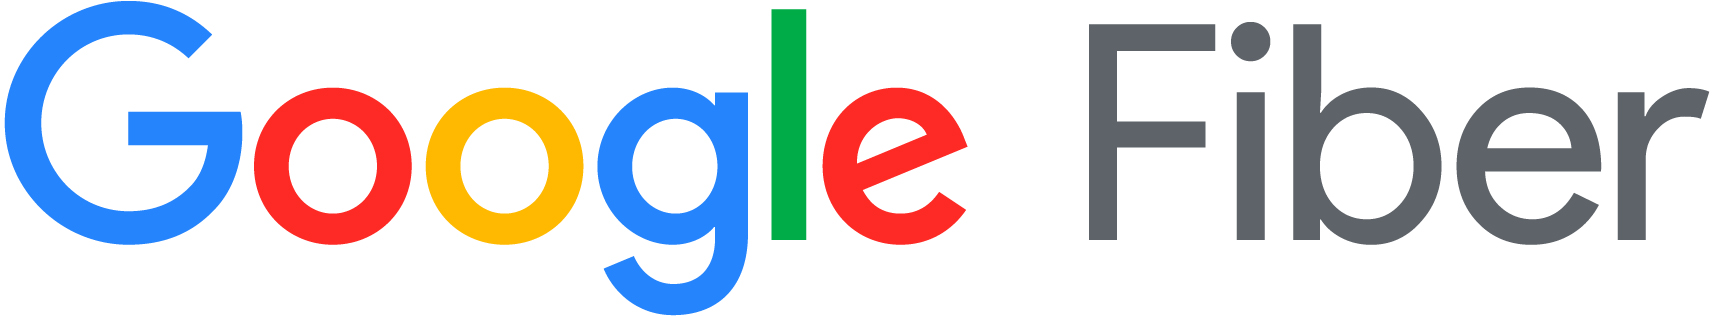 GoogleFiber_logo-color.jpg